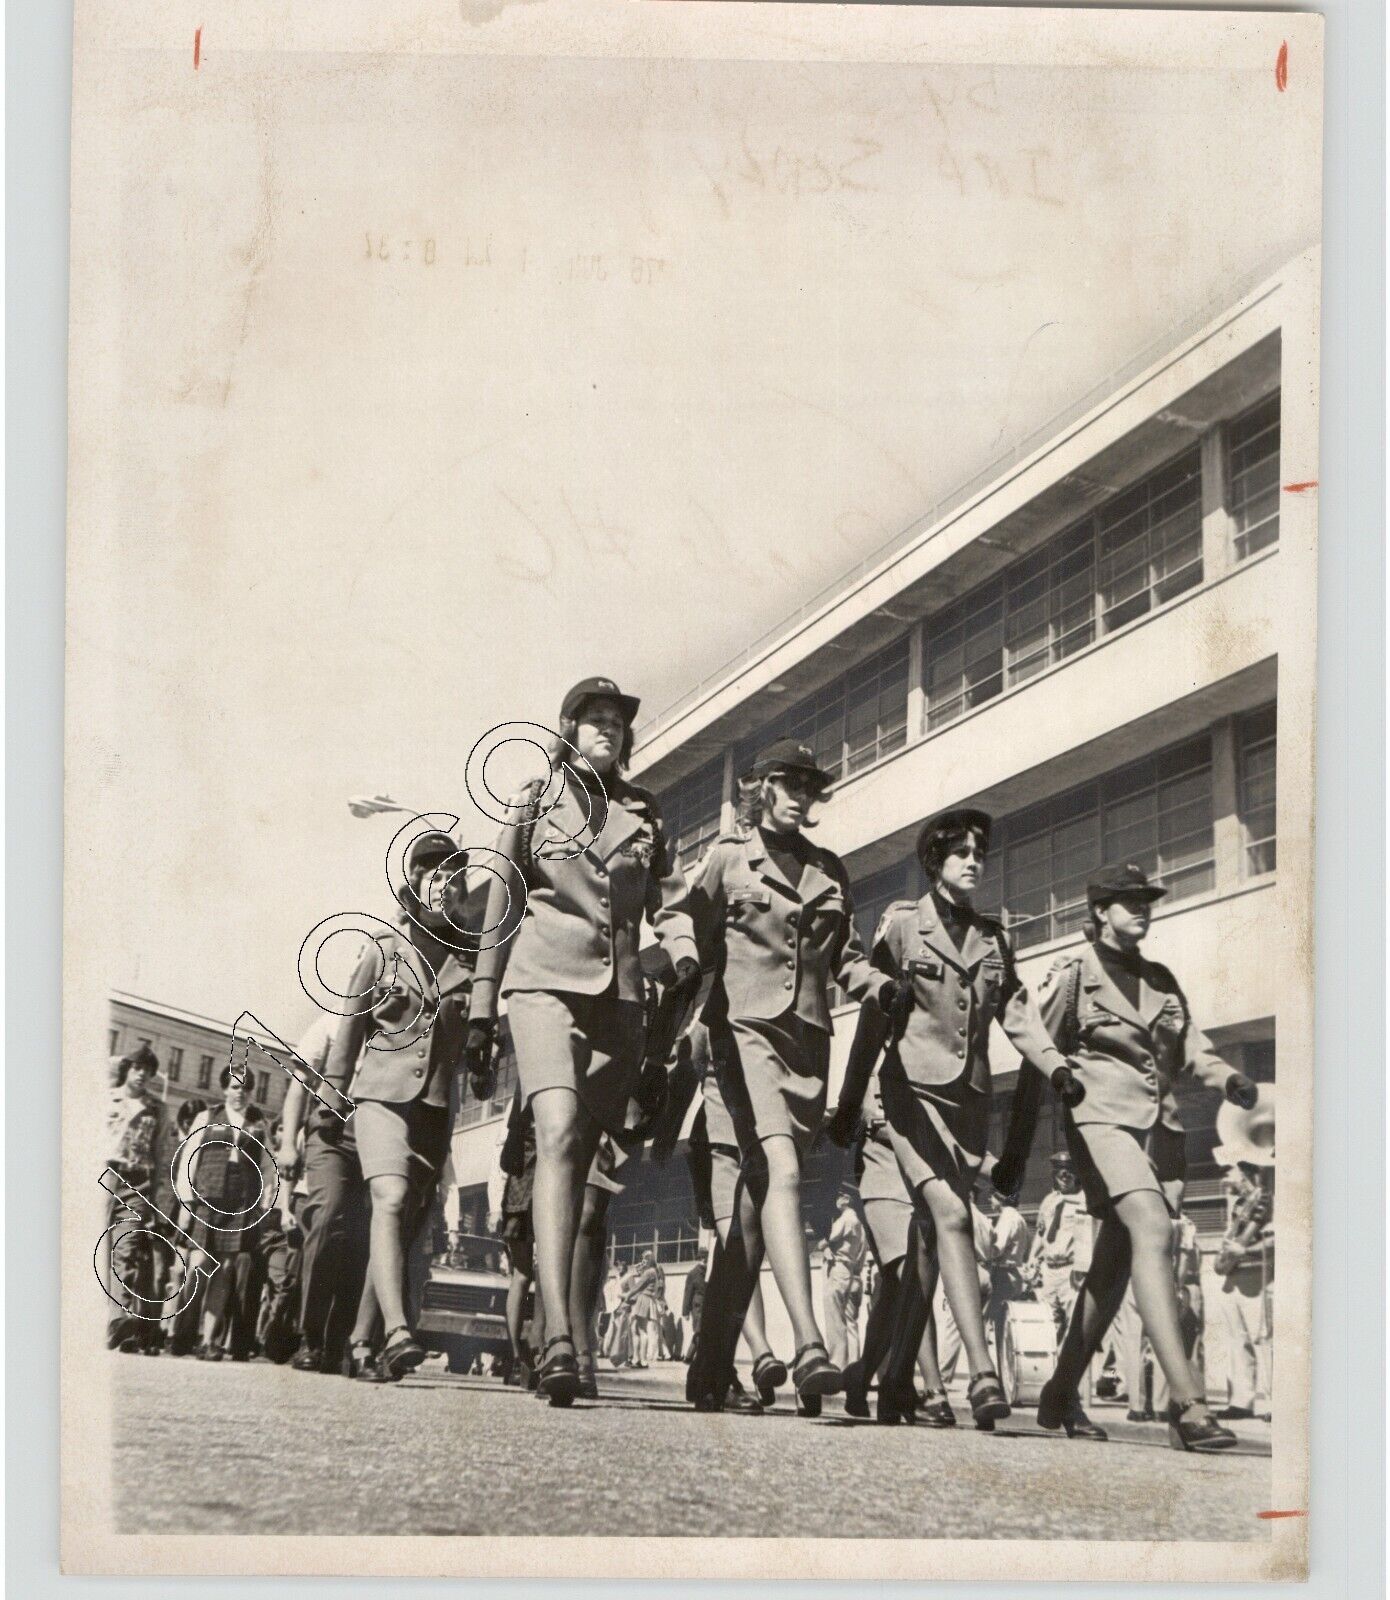 Women ROTC Members March @ MEMORIAL DAY PARADE Military Uniform 1976 Press Photo